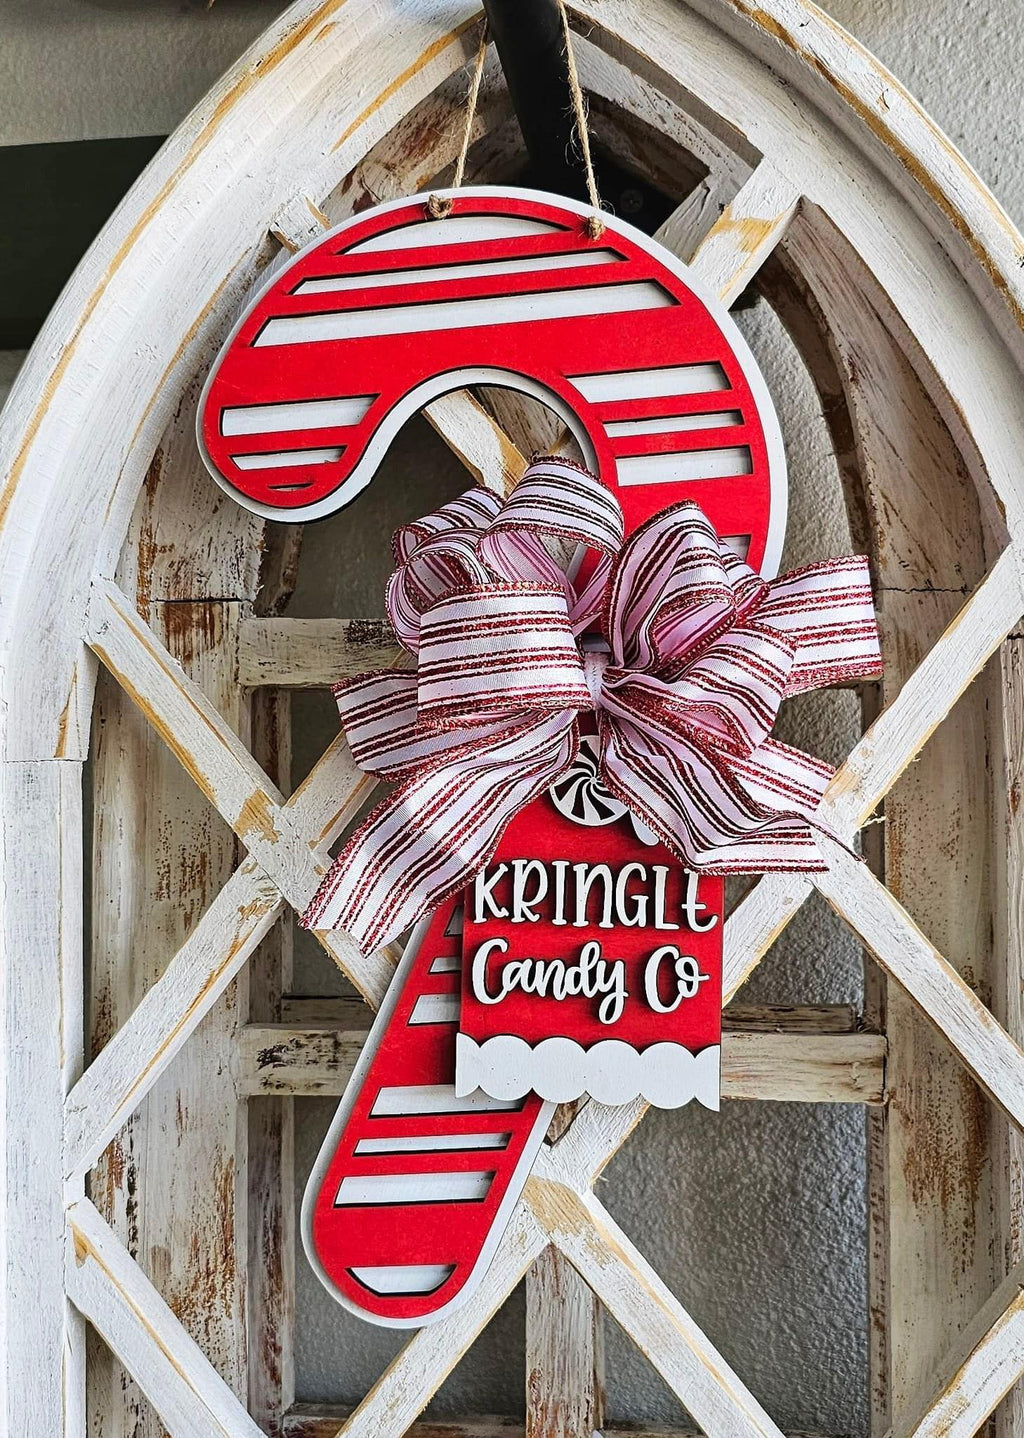 3D Door hanger - Candy Cane Kringle Candy Co